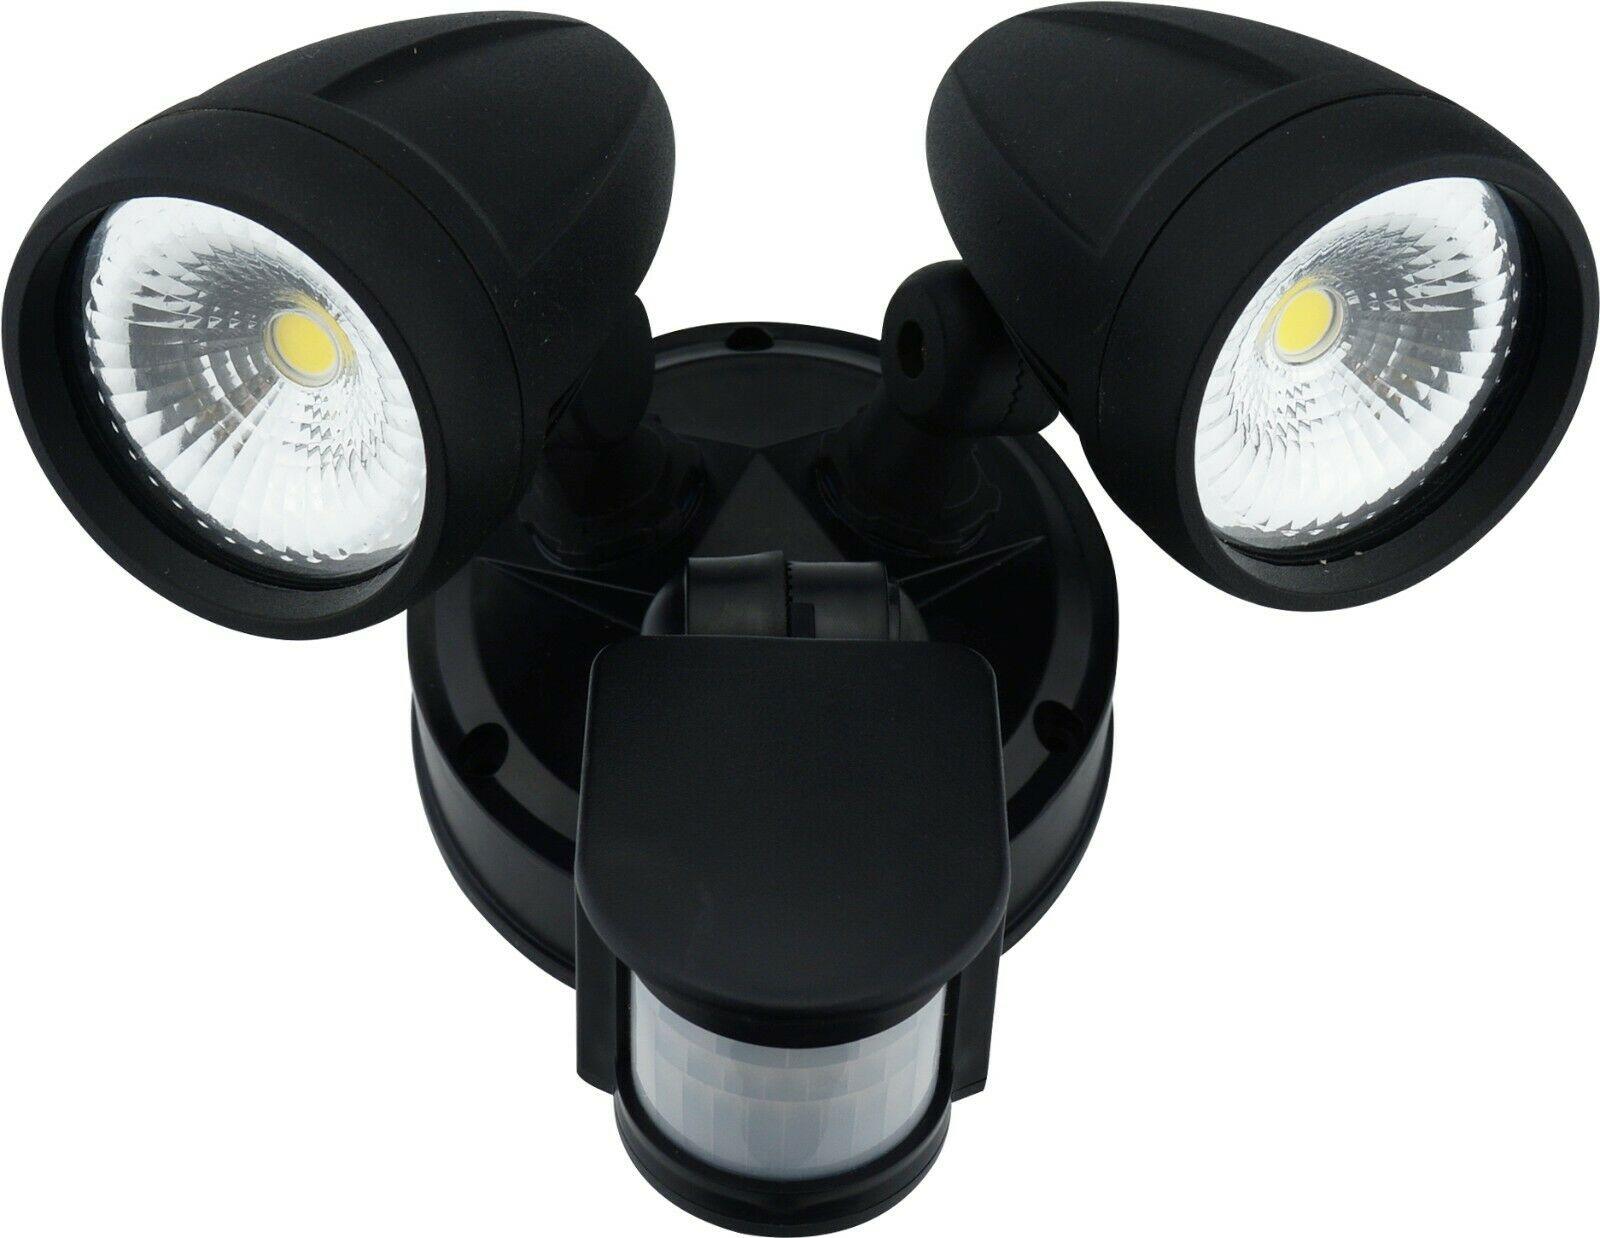 Black Sensor LED Twin Floodlight Spotlight Outdoor Security For Garage IP54 - Office Catch